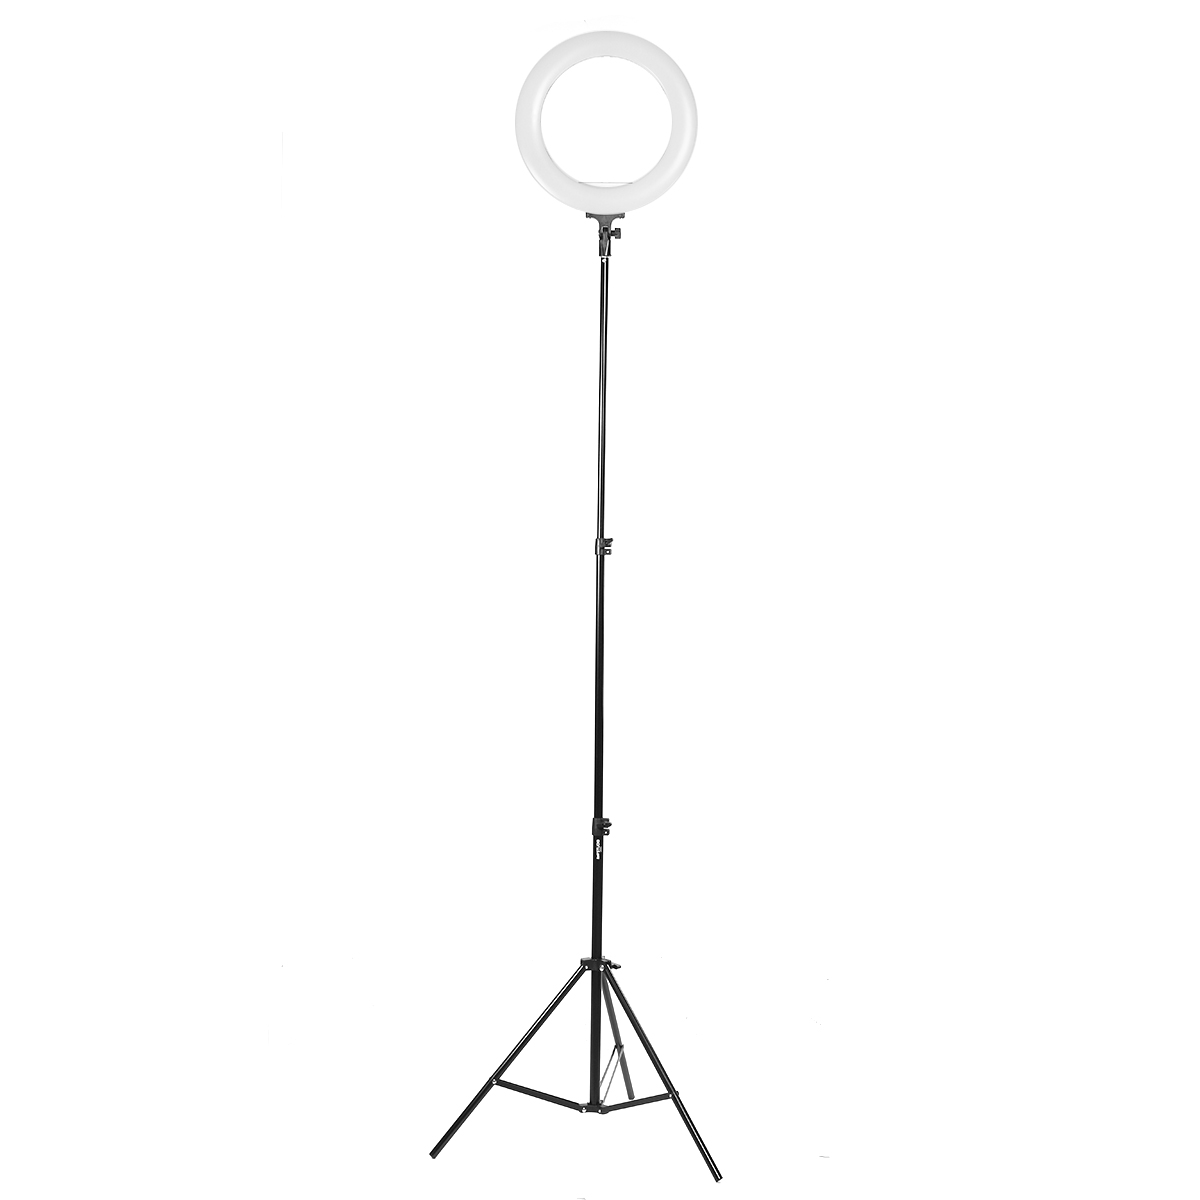 170cm-17M-Foldable-Video-Ring-Light-Flash-Light-Holder-Stand-Tripod-for-Youtube-Tik-Tok-Live-Streami-1626557-1